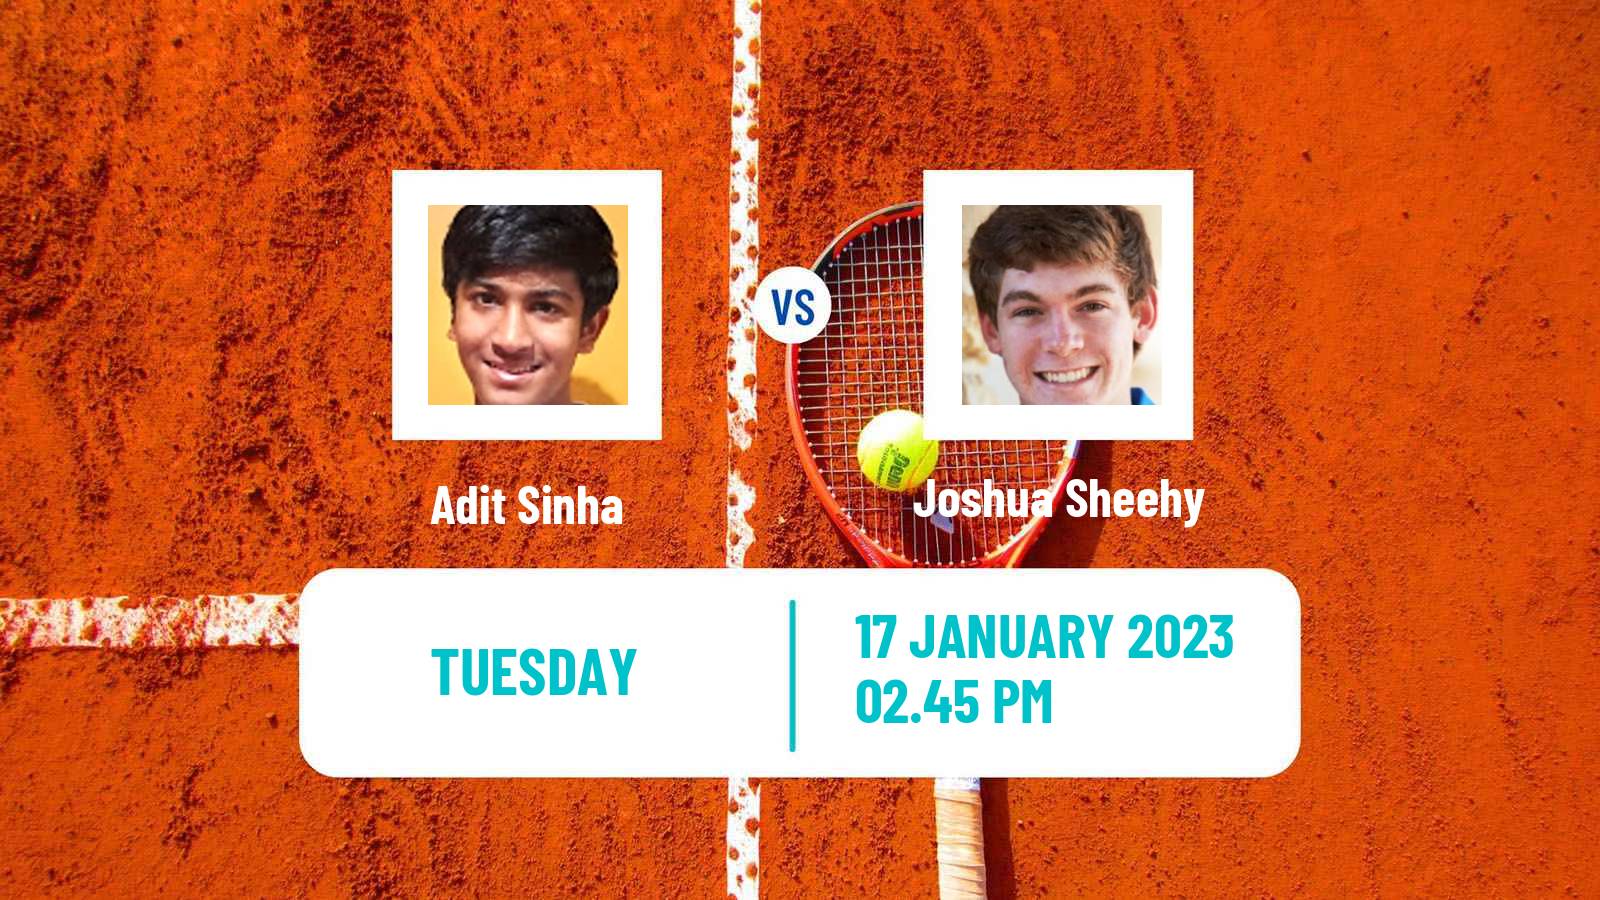 Tennis ITF Tournaments Adit Sinha - Joshua Sheehy